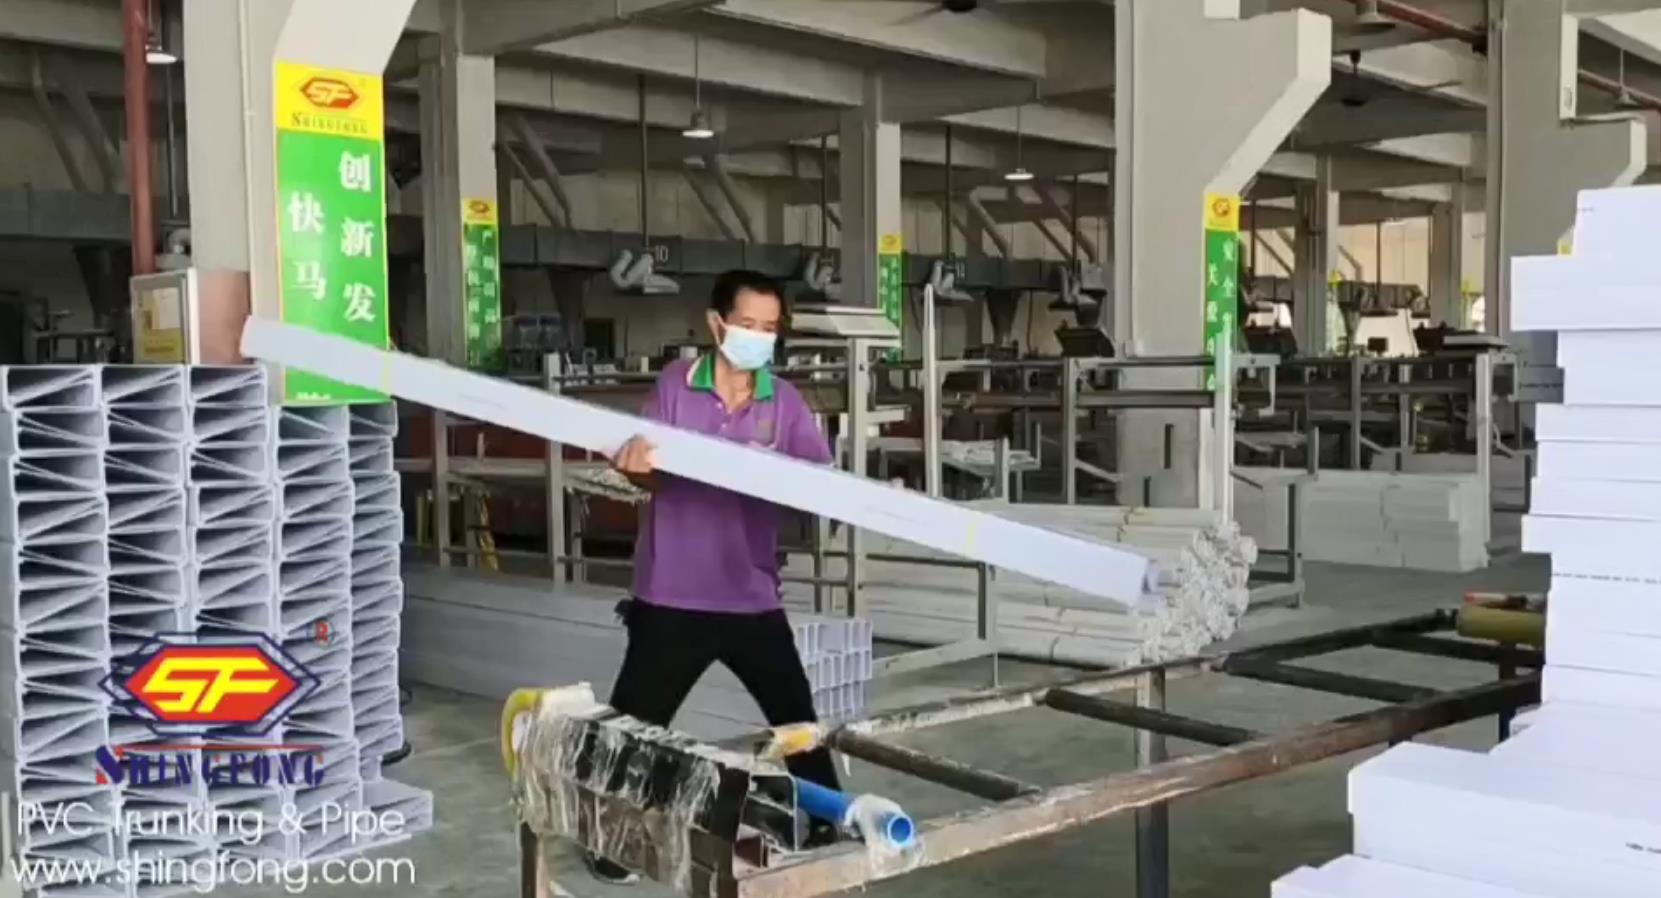 Labing Maayo nga OEM Shingfong PVC Industrial Trunking 200x100mm Company Supplier